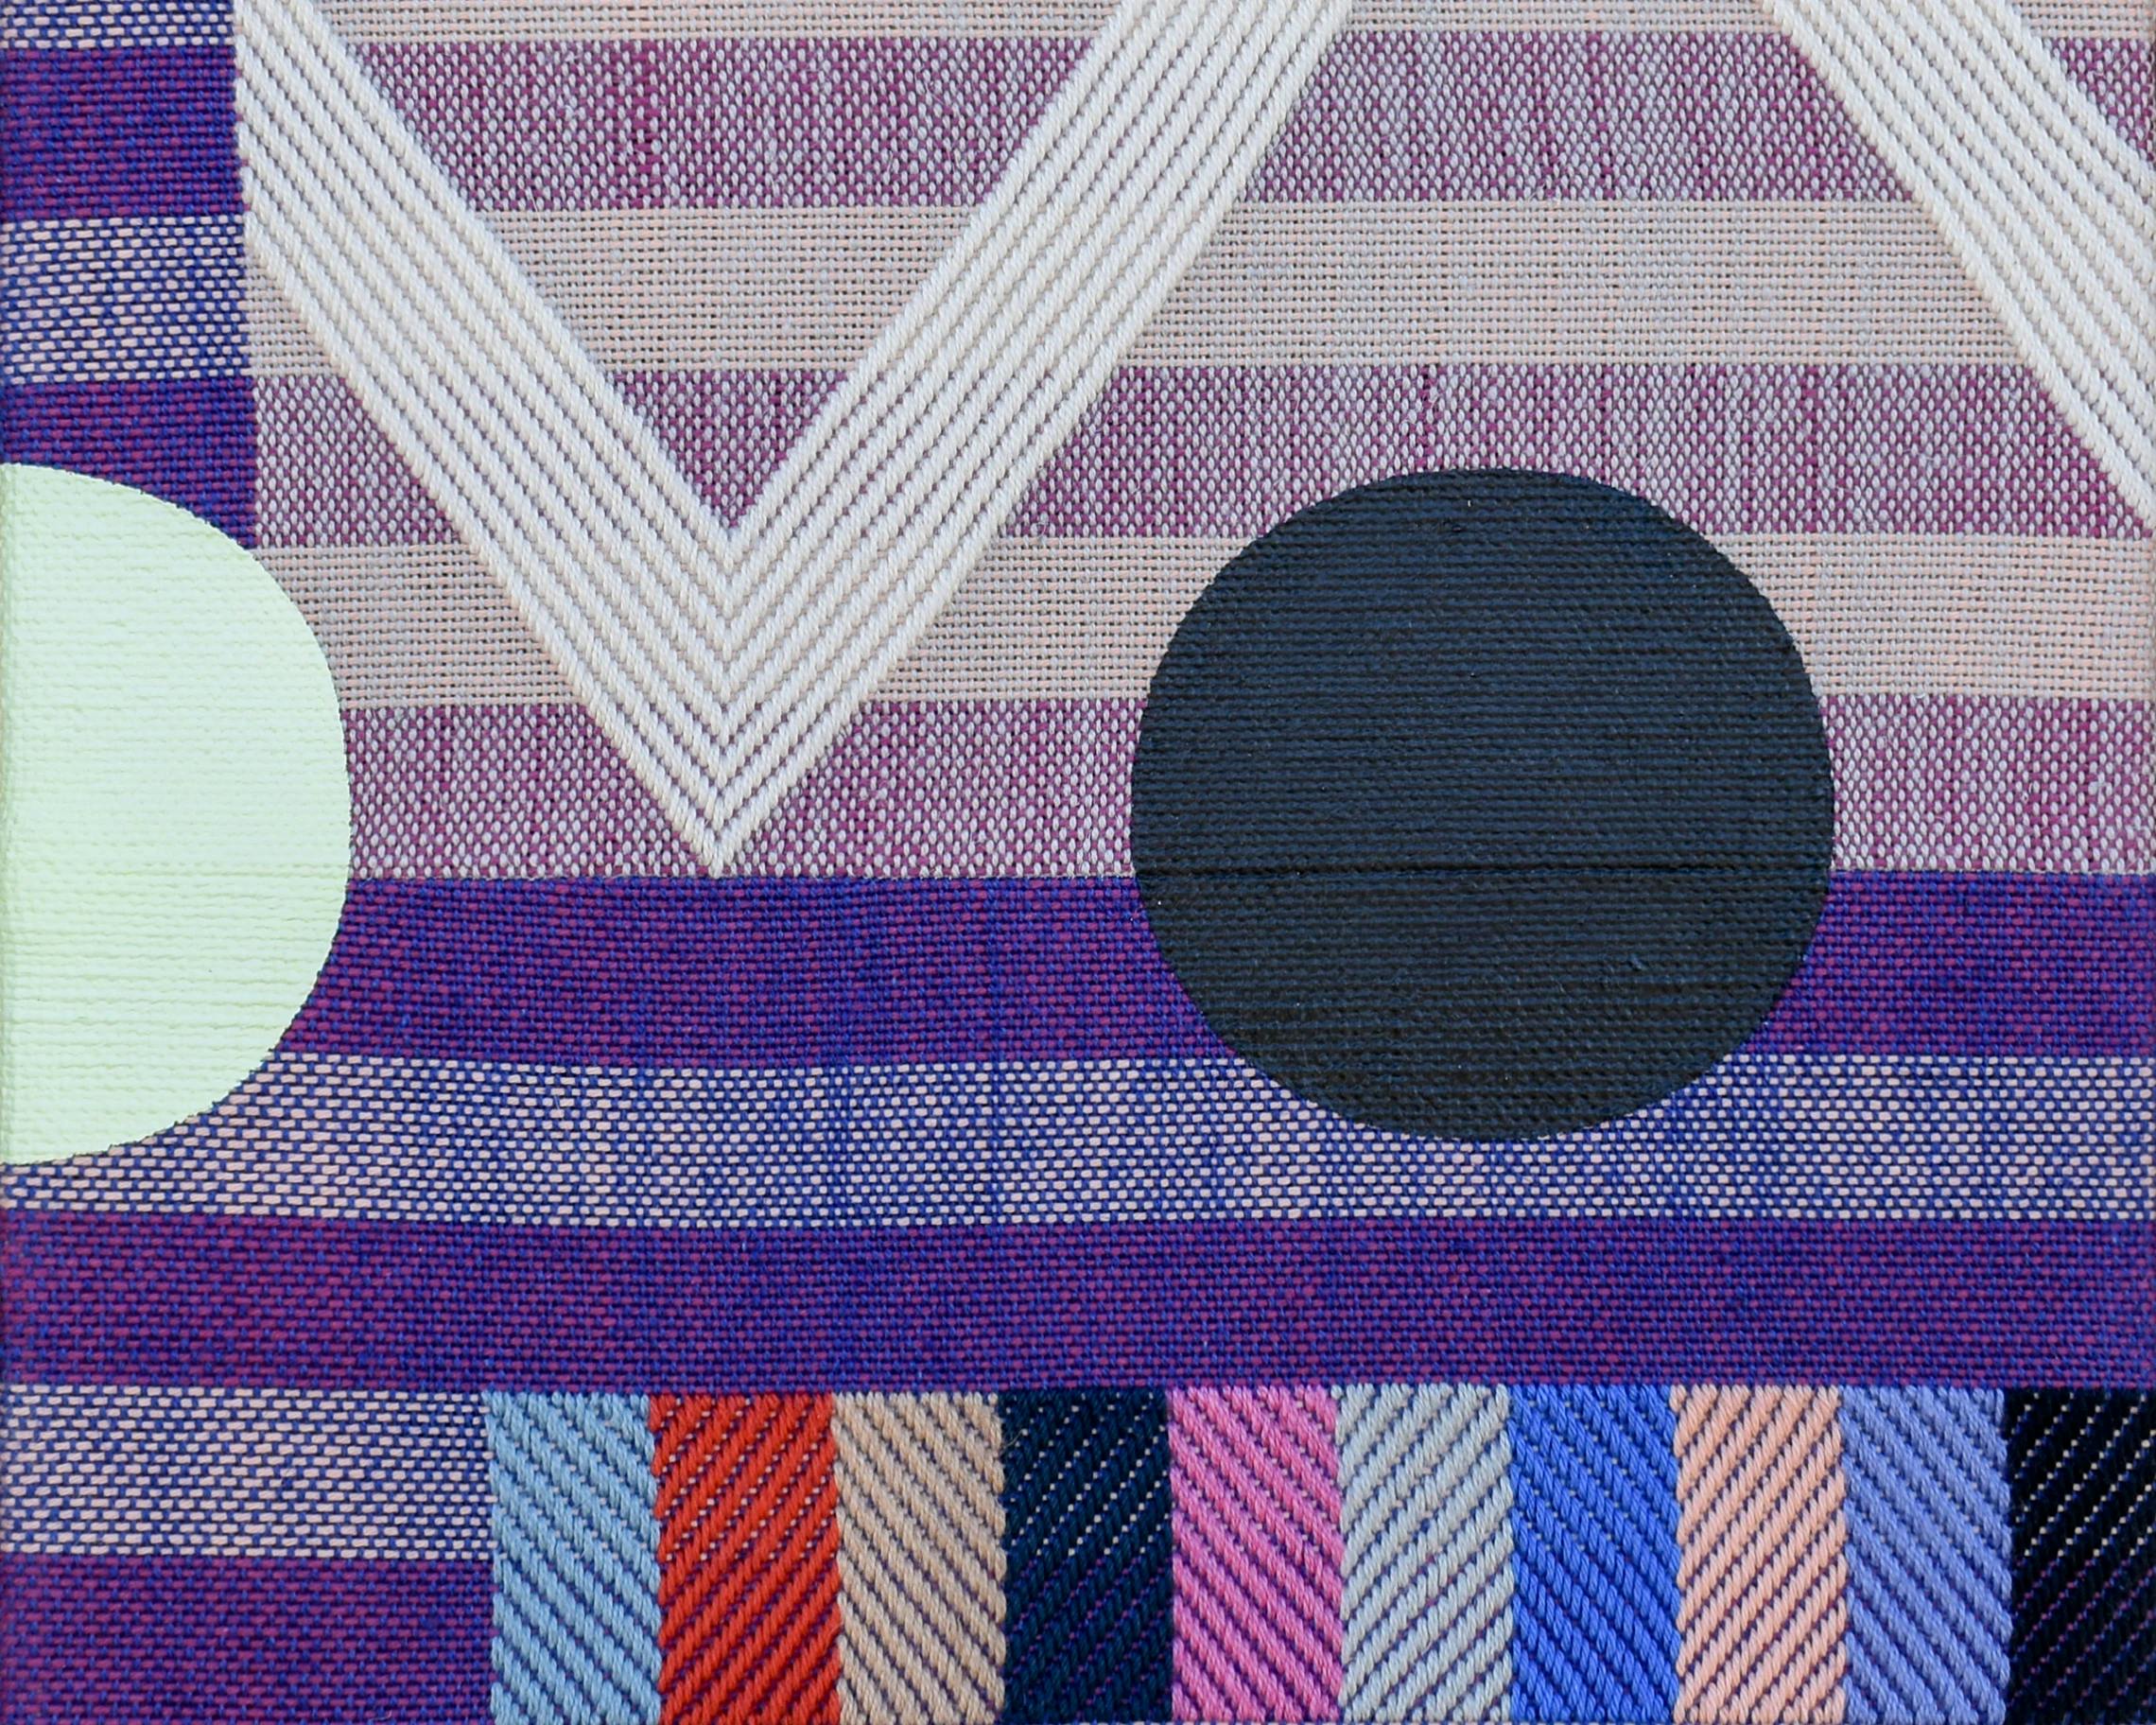 Purple and blue striped textile piece by Sarah Sullivan Sherrod.